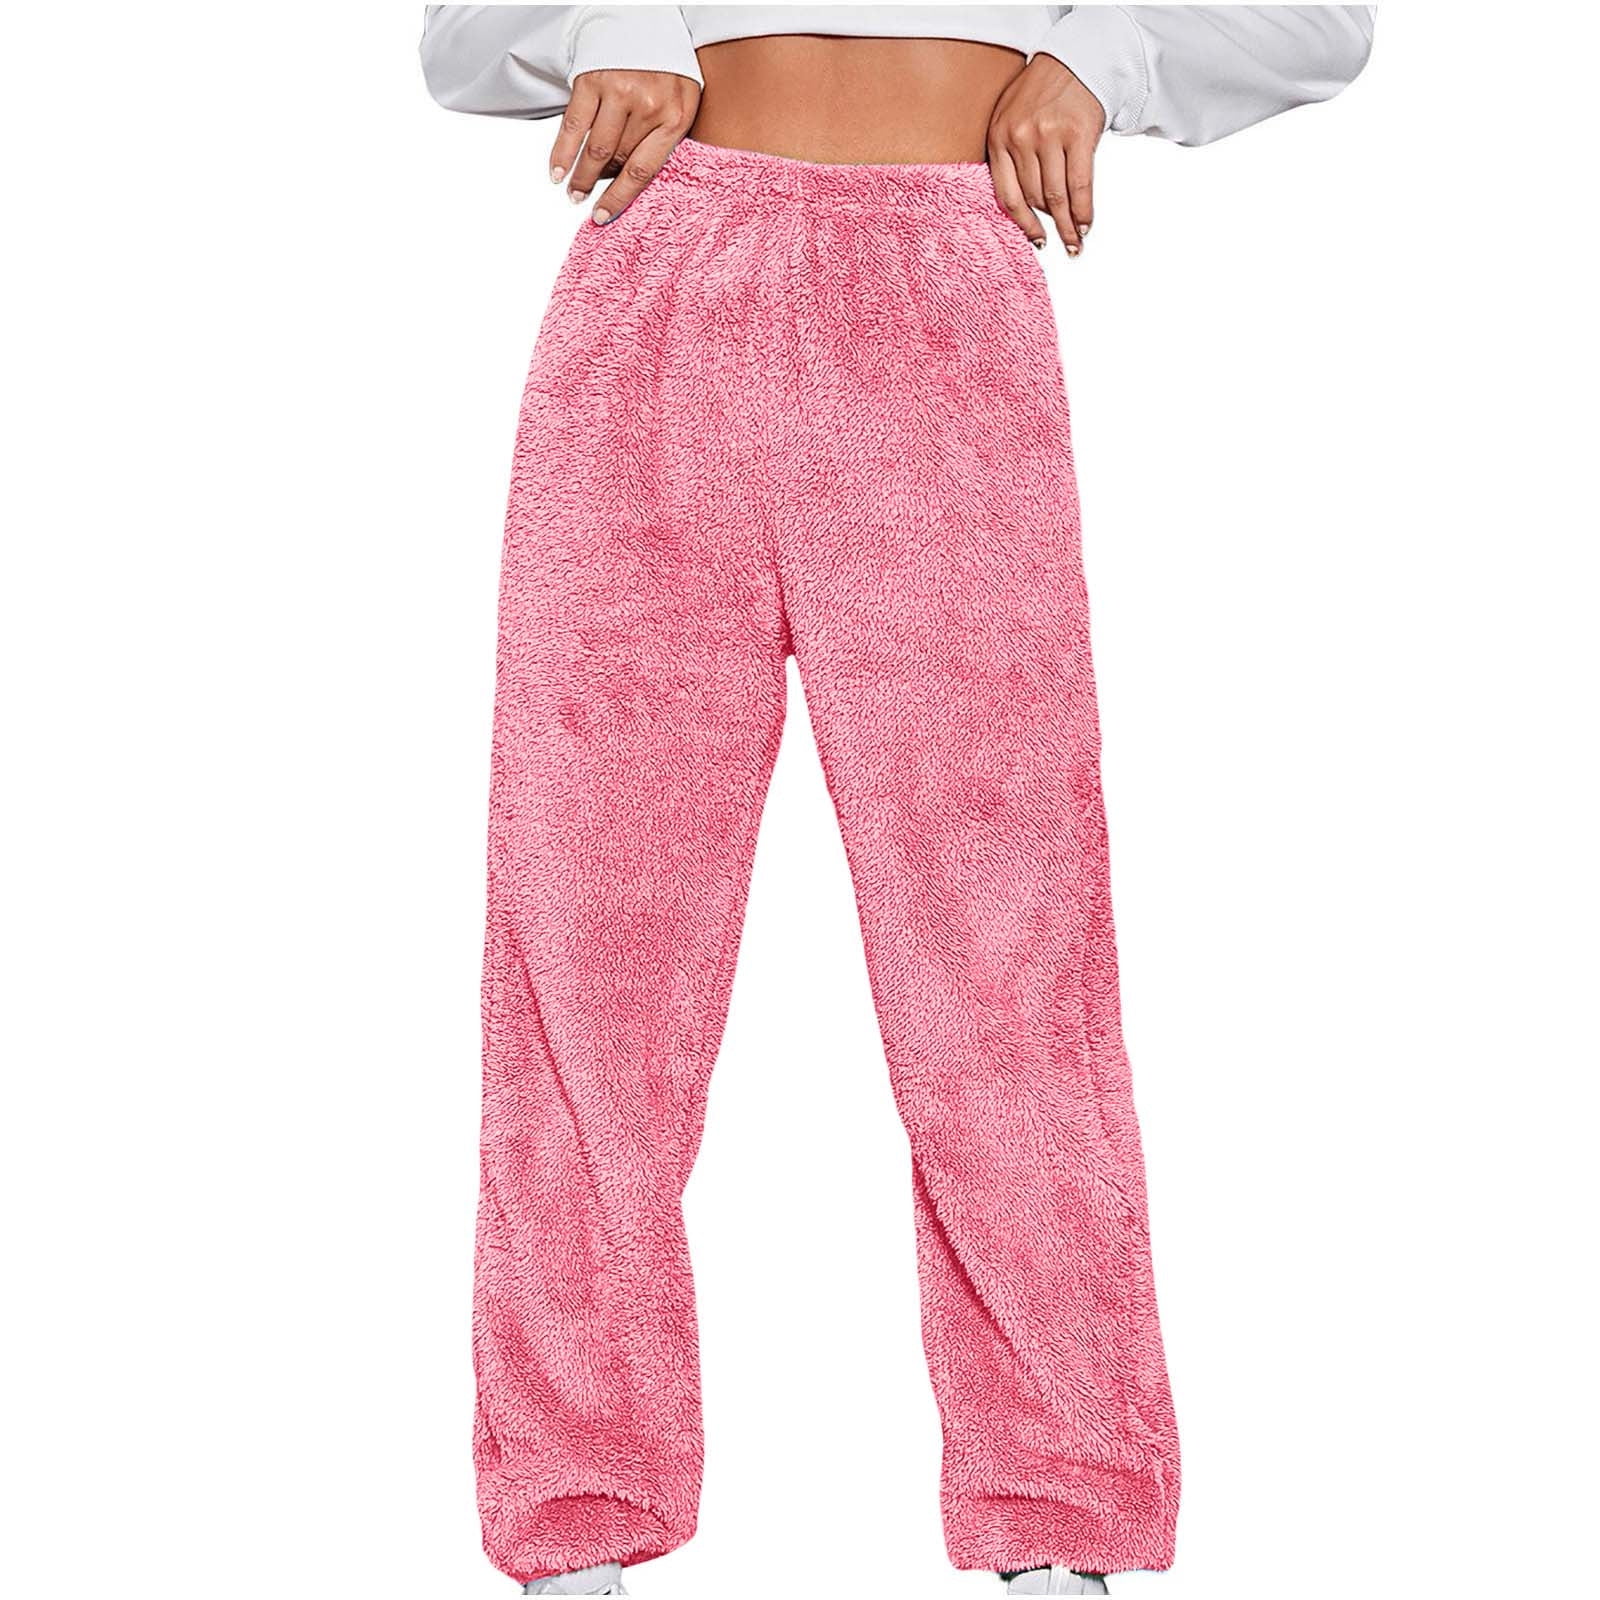 Hifzaa womens fleece track pant for winter warm lower for women pajama  pyjama for winter season